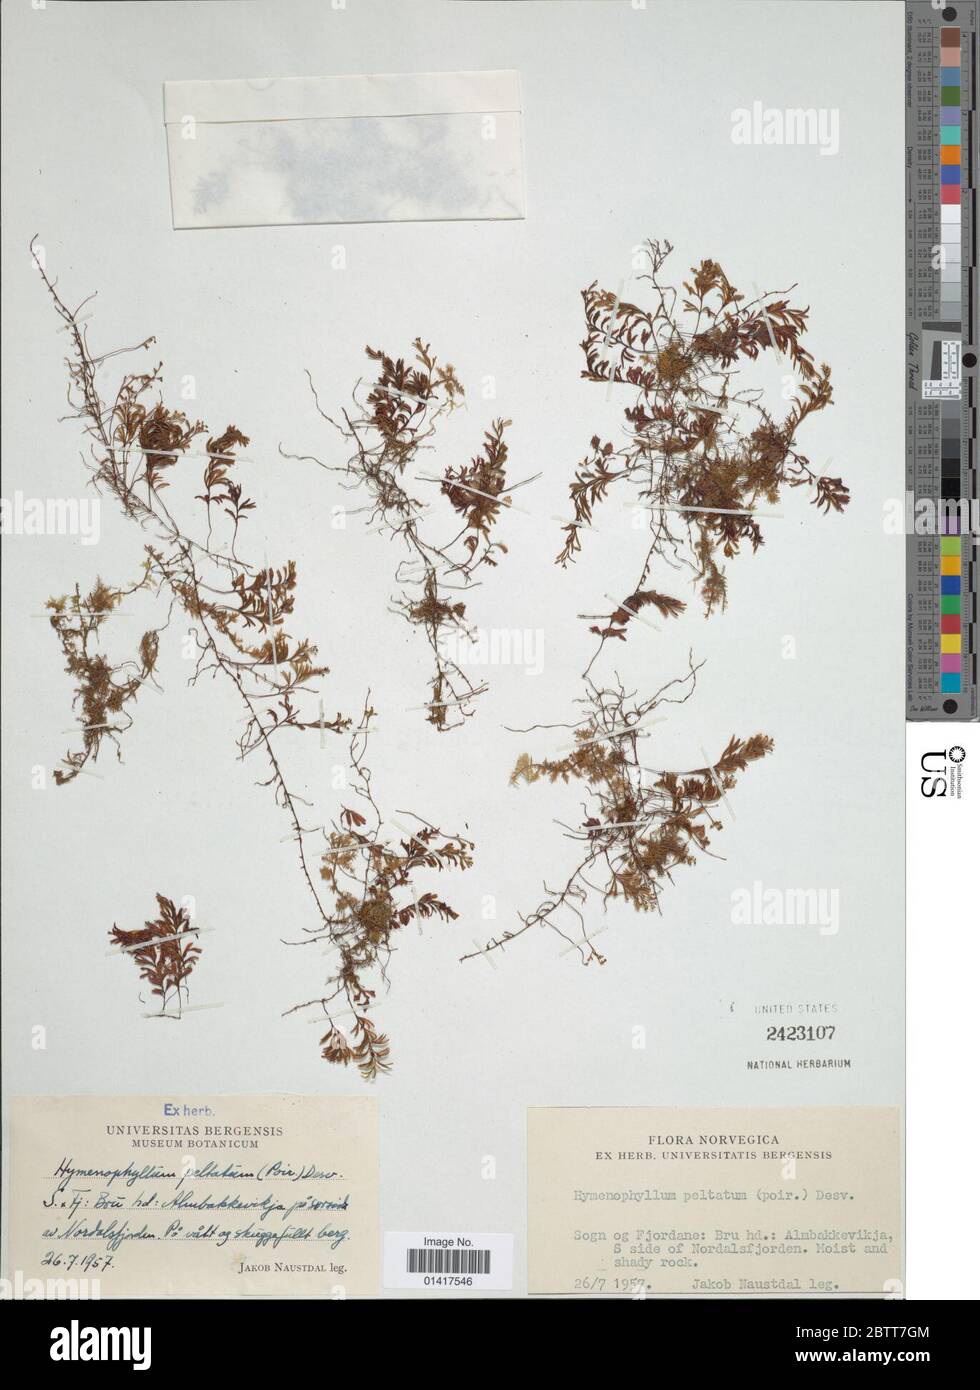 Hymenophyllum peltatum. Stock Photo